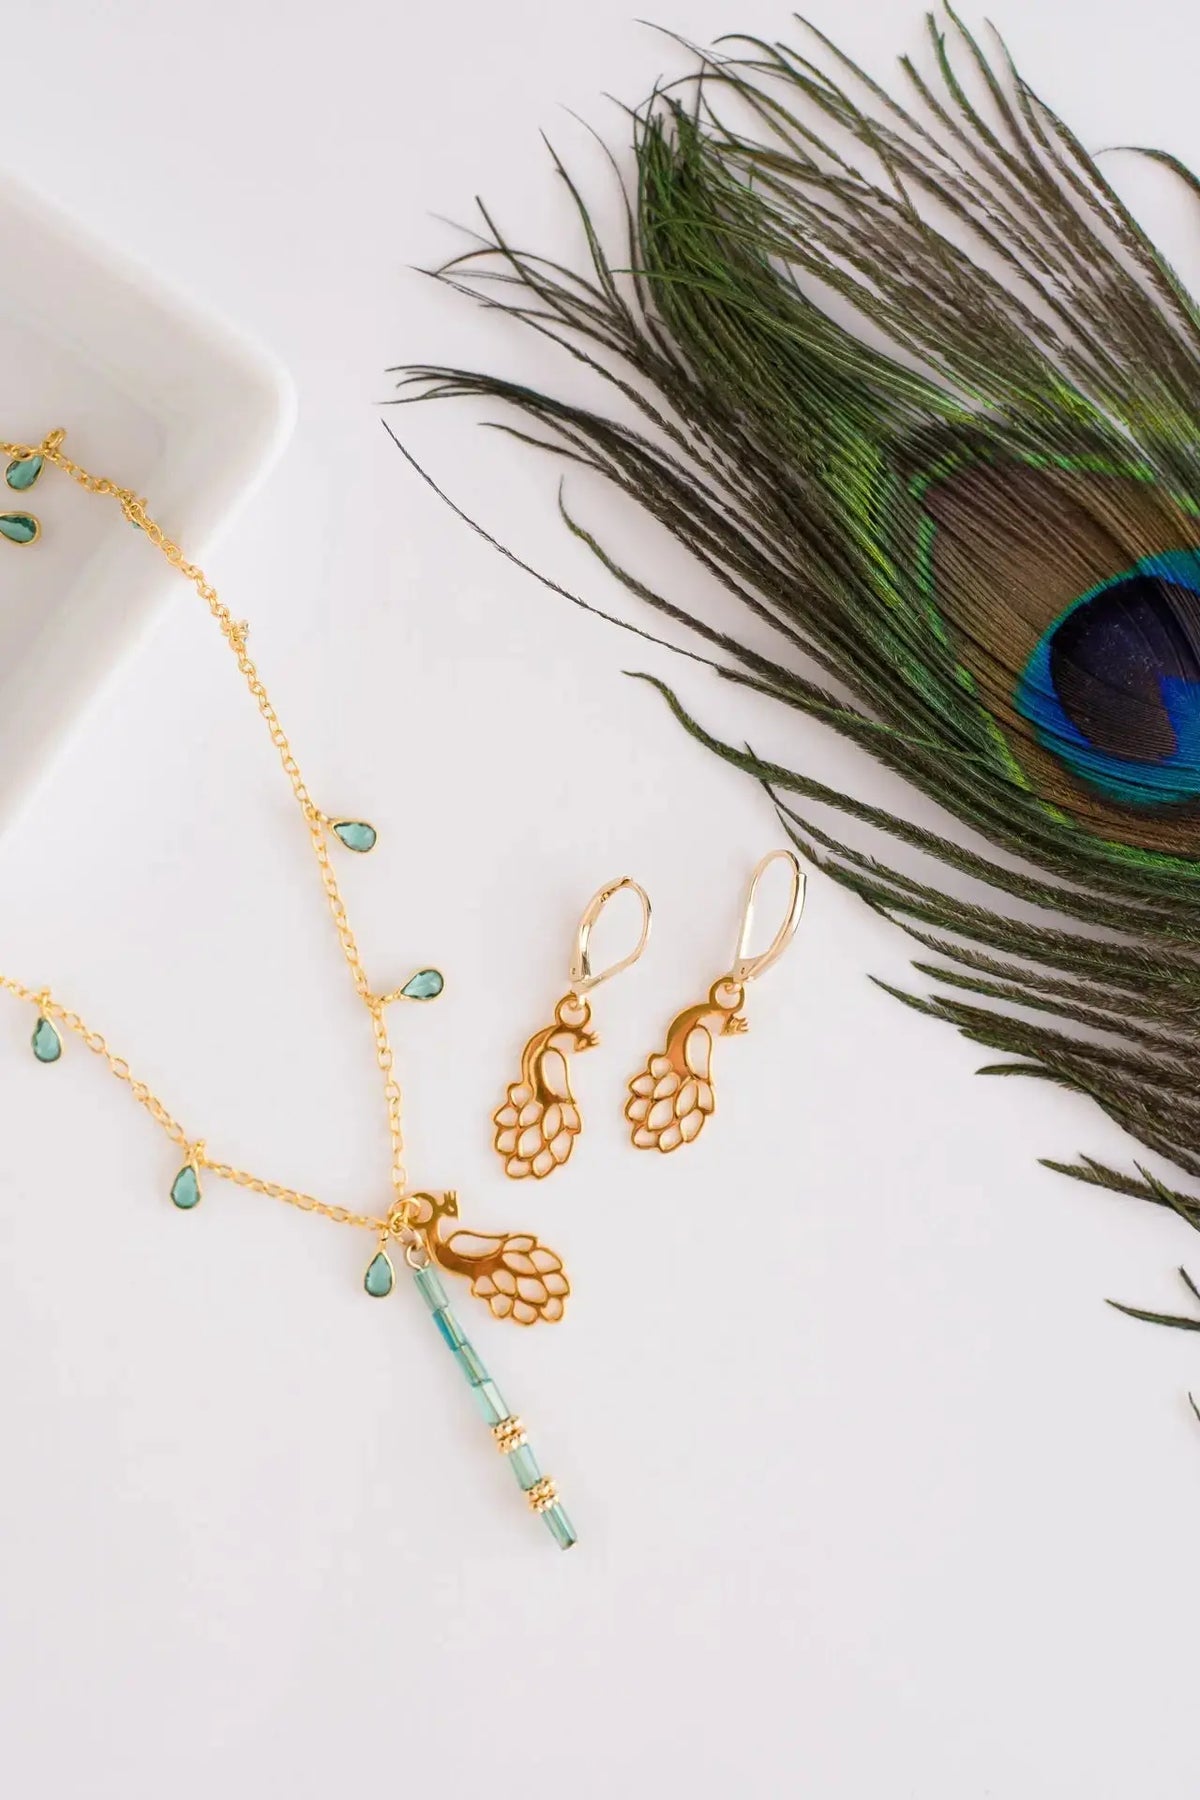 Peacock Apatite Pendant Necklace - Mystic Soul Jewelry